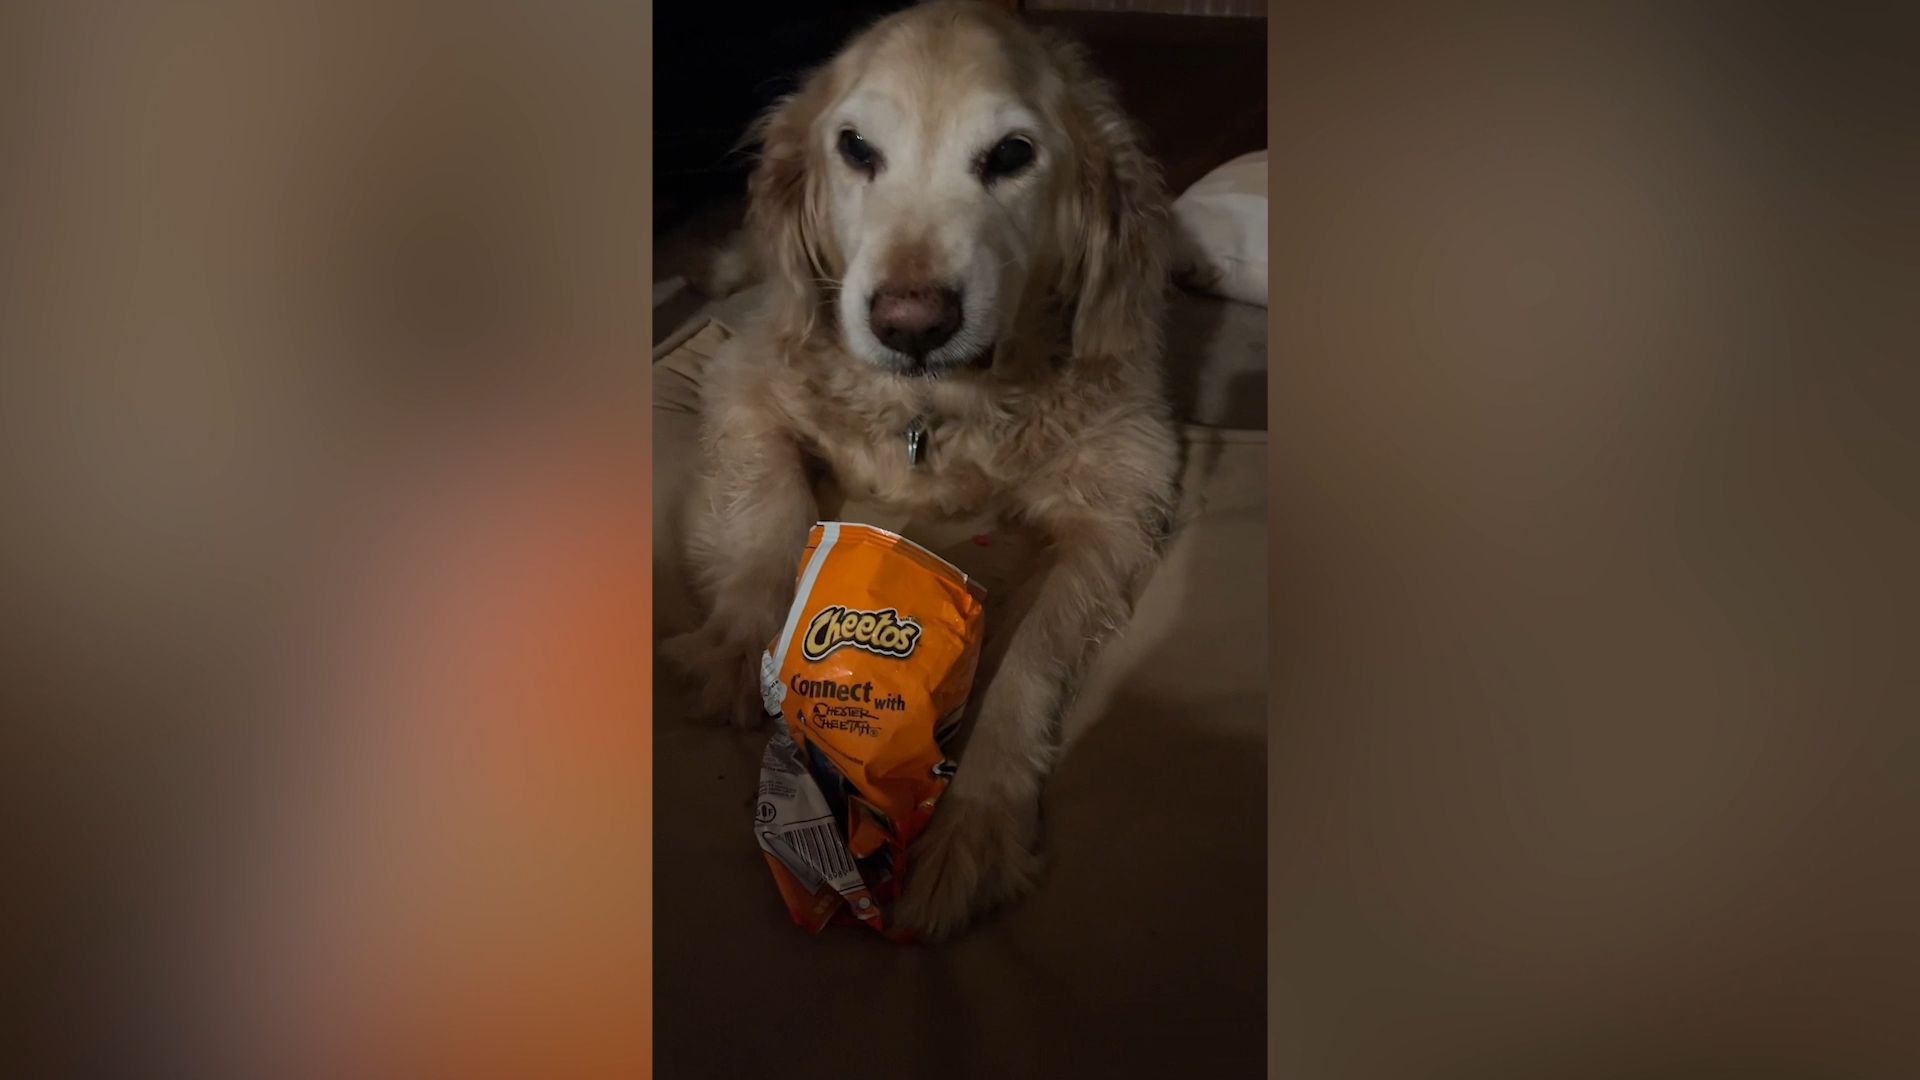 Dog vigorously defends bag of chips